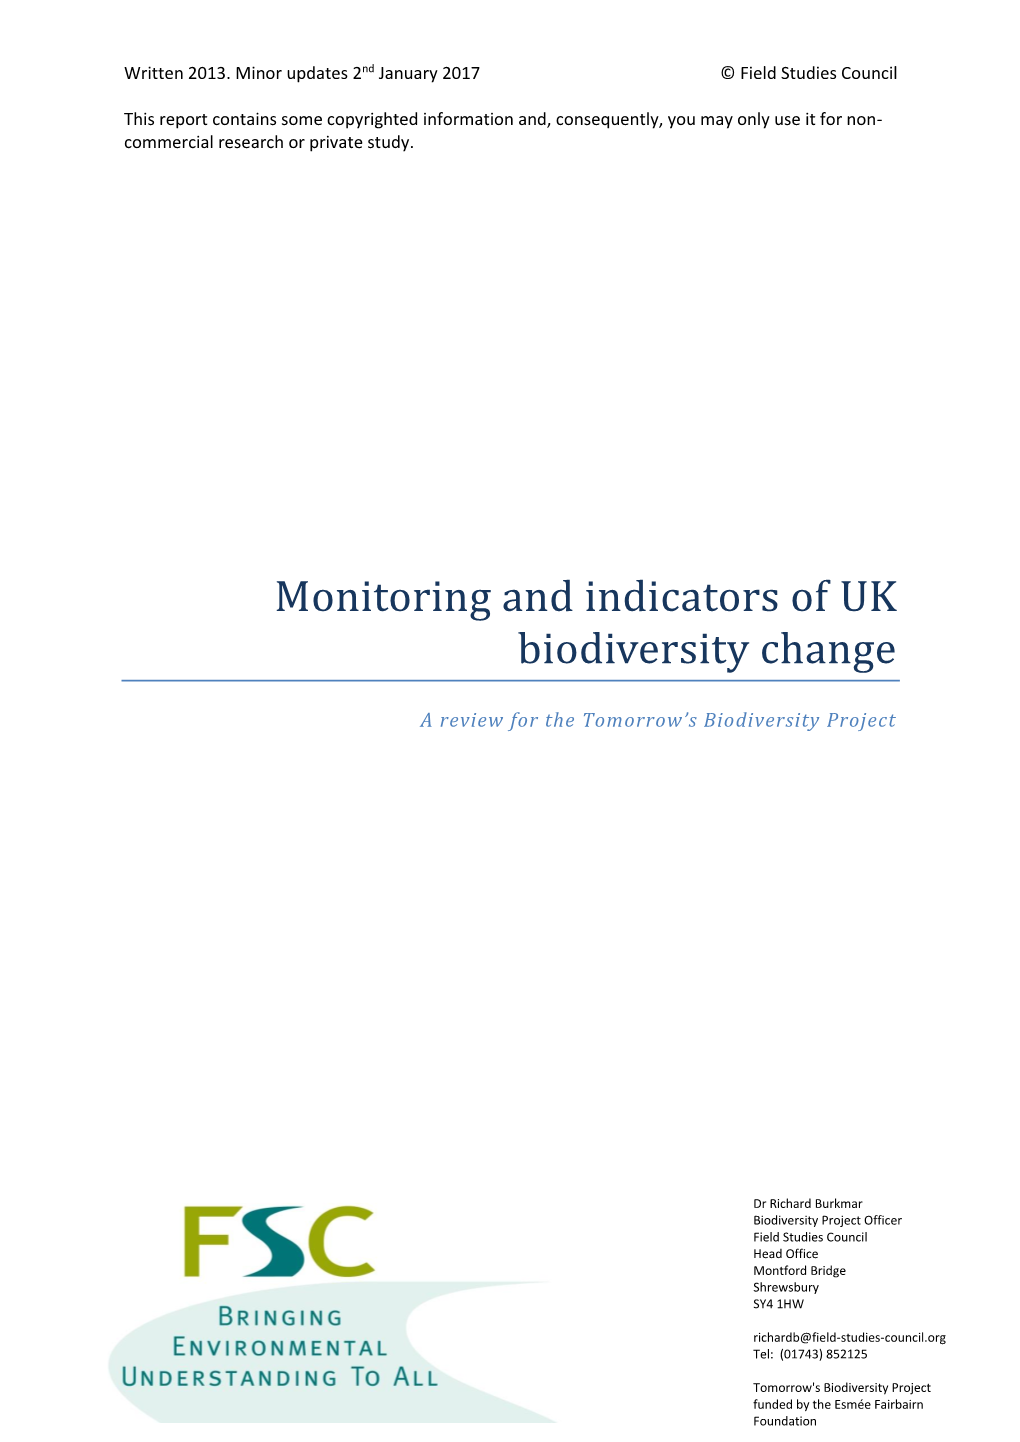 Monitoring and Indicators of UK Biodiversity Change